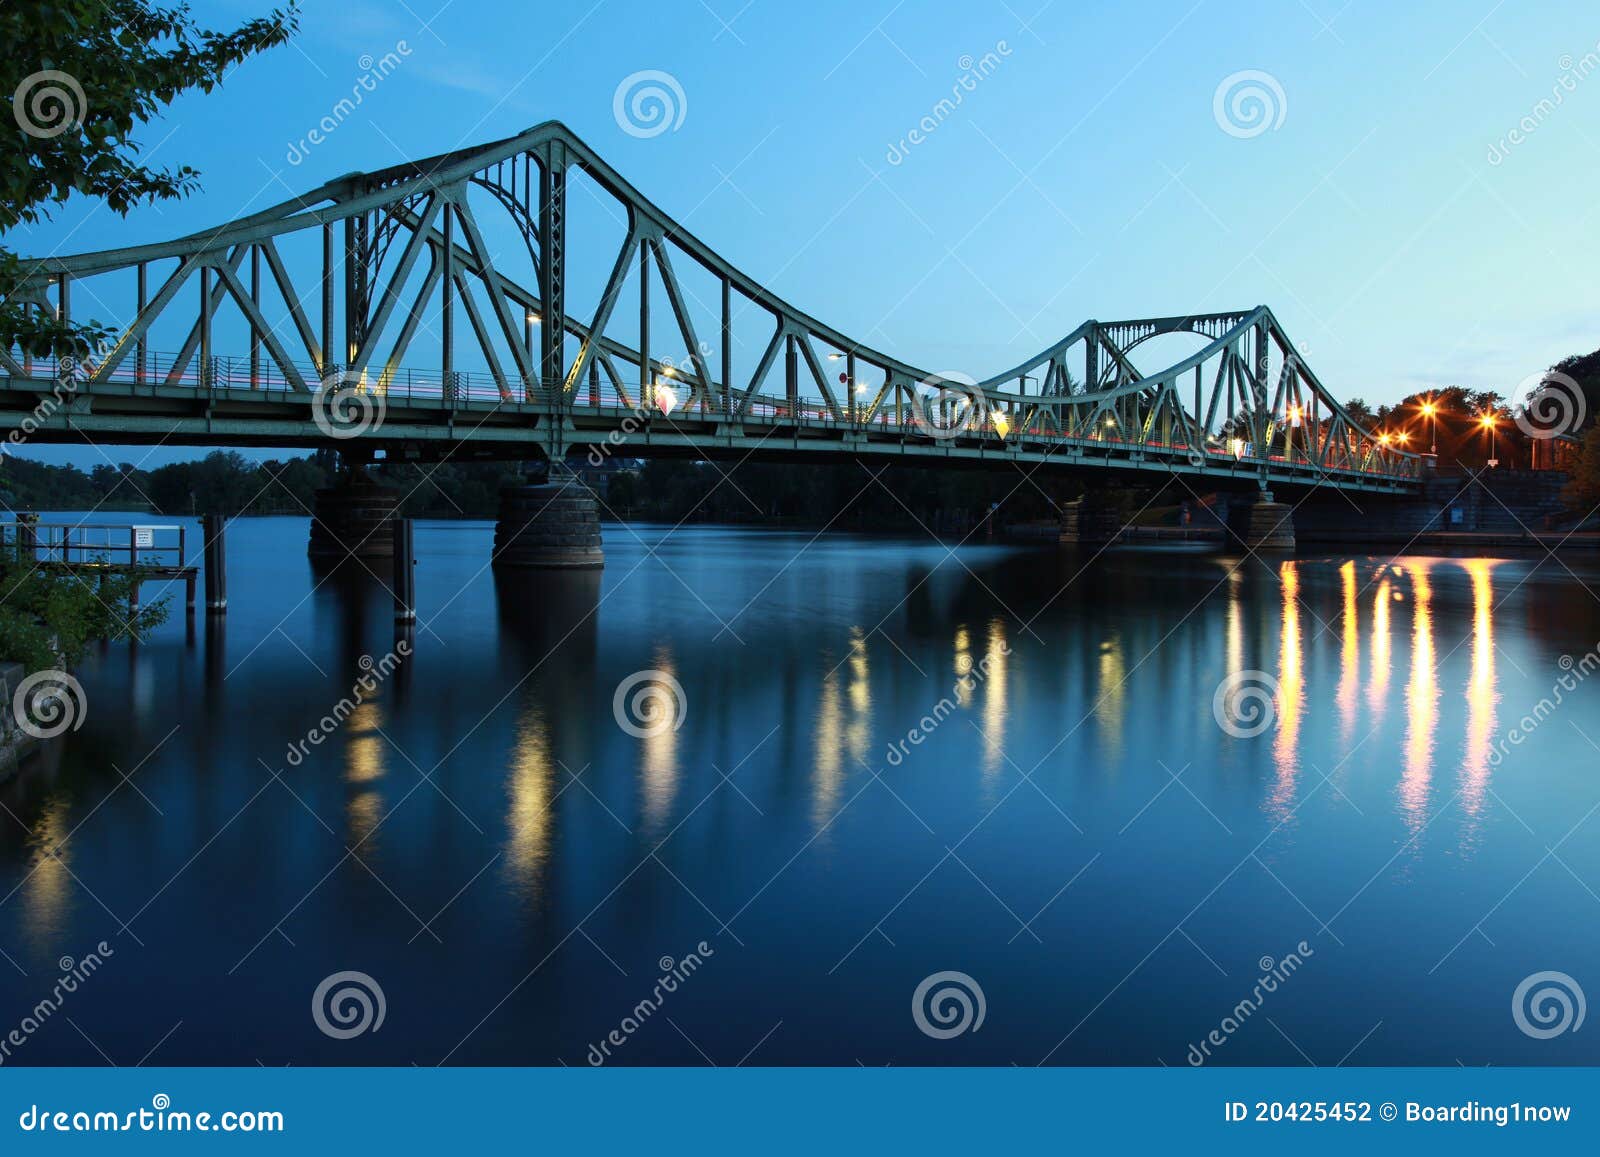 berlin / potsdam: glienicker bridge